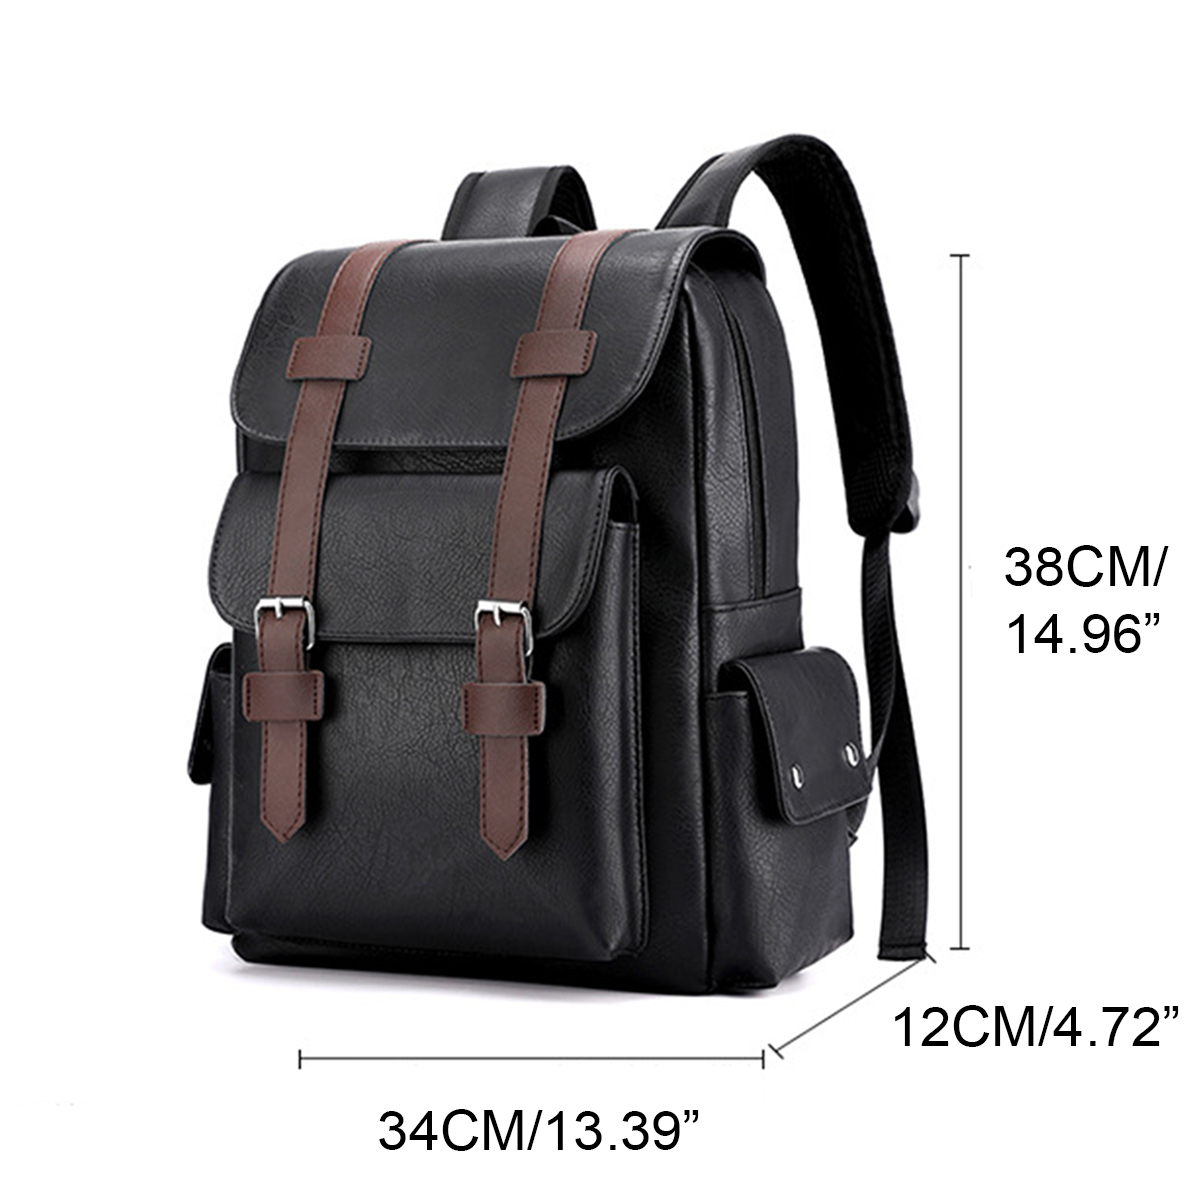 Men-Leather-School-Backpacks-Outdoor-Travel-Satchel-Shoulder-Bag-Rucksack-Satchel-Handbag-1698999-13